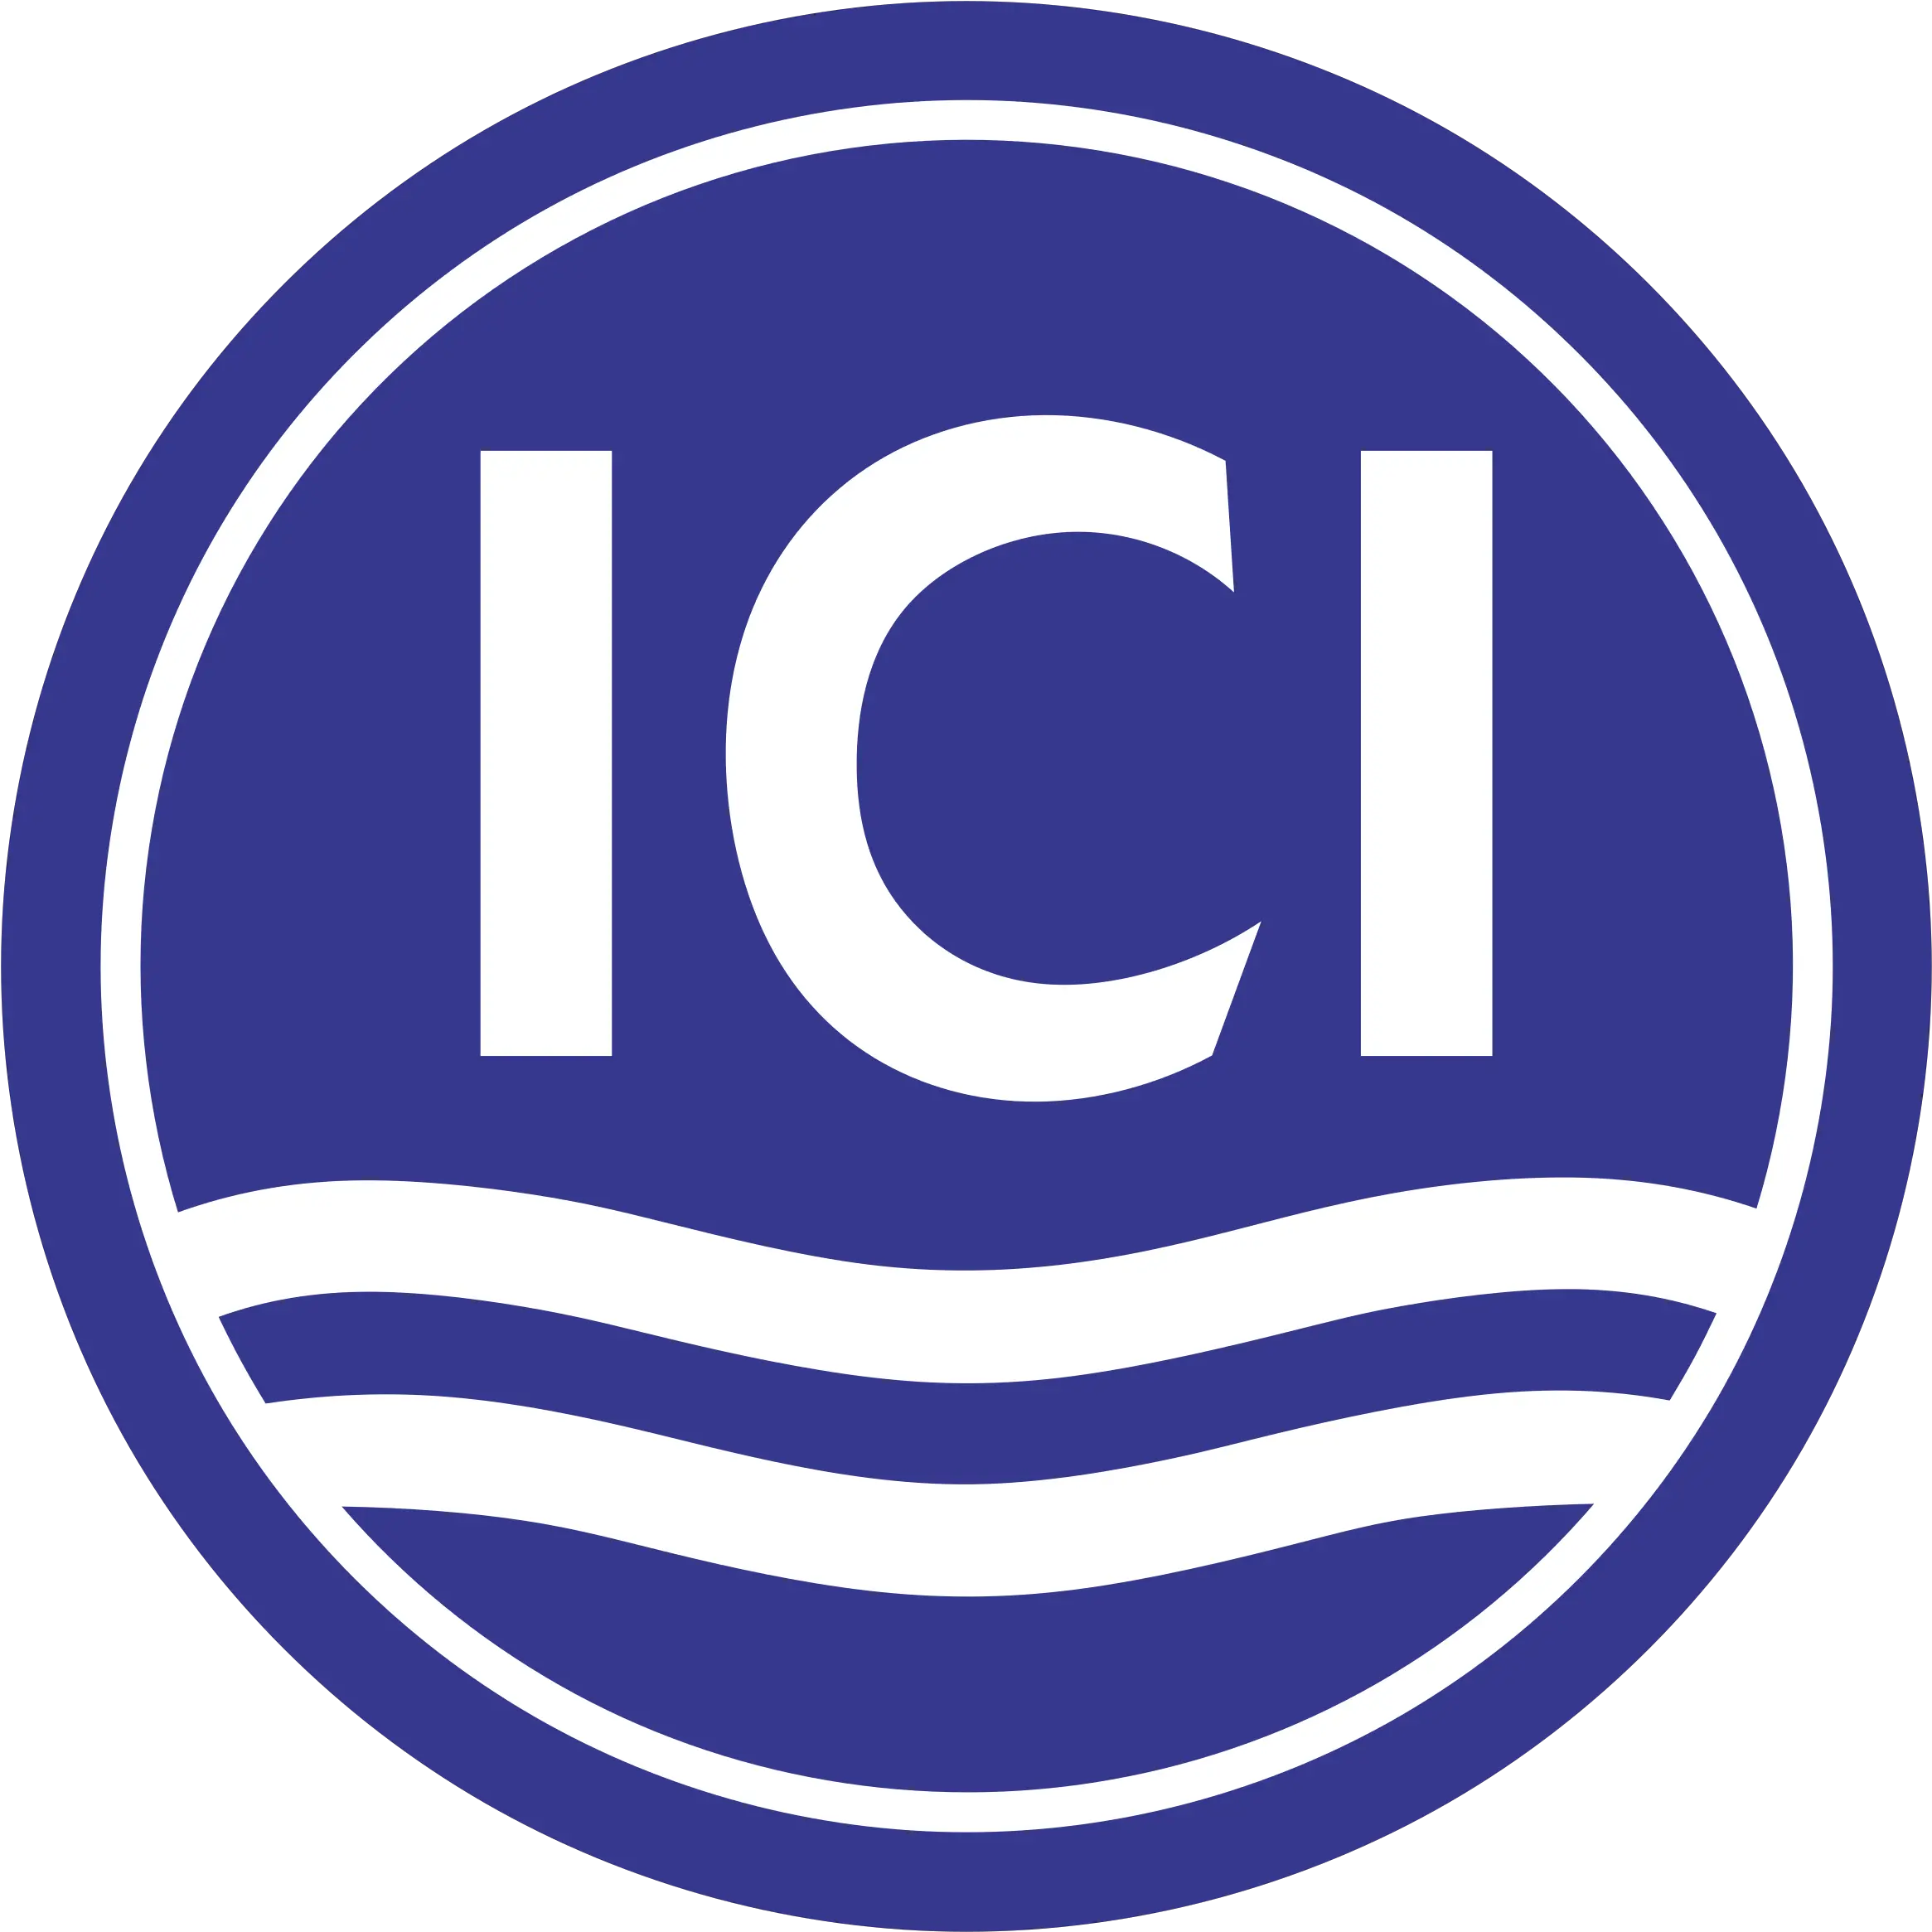 Ici Logo Png Transparent U0026 Svg Vector Freebie Supply Imperial Chemical Industries Symbol Png